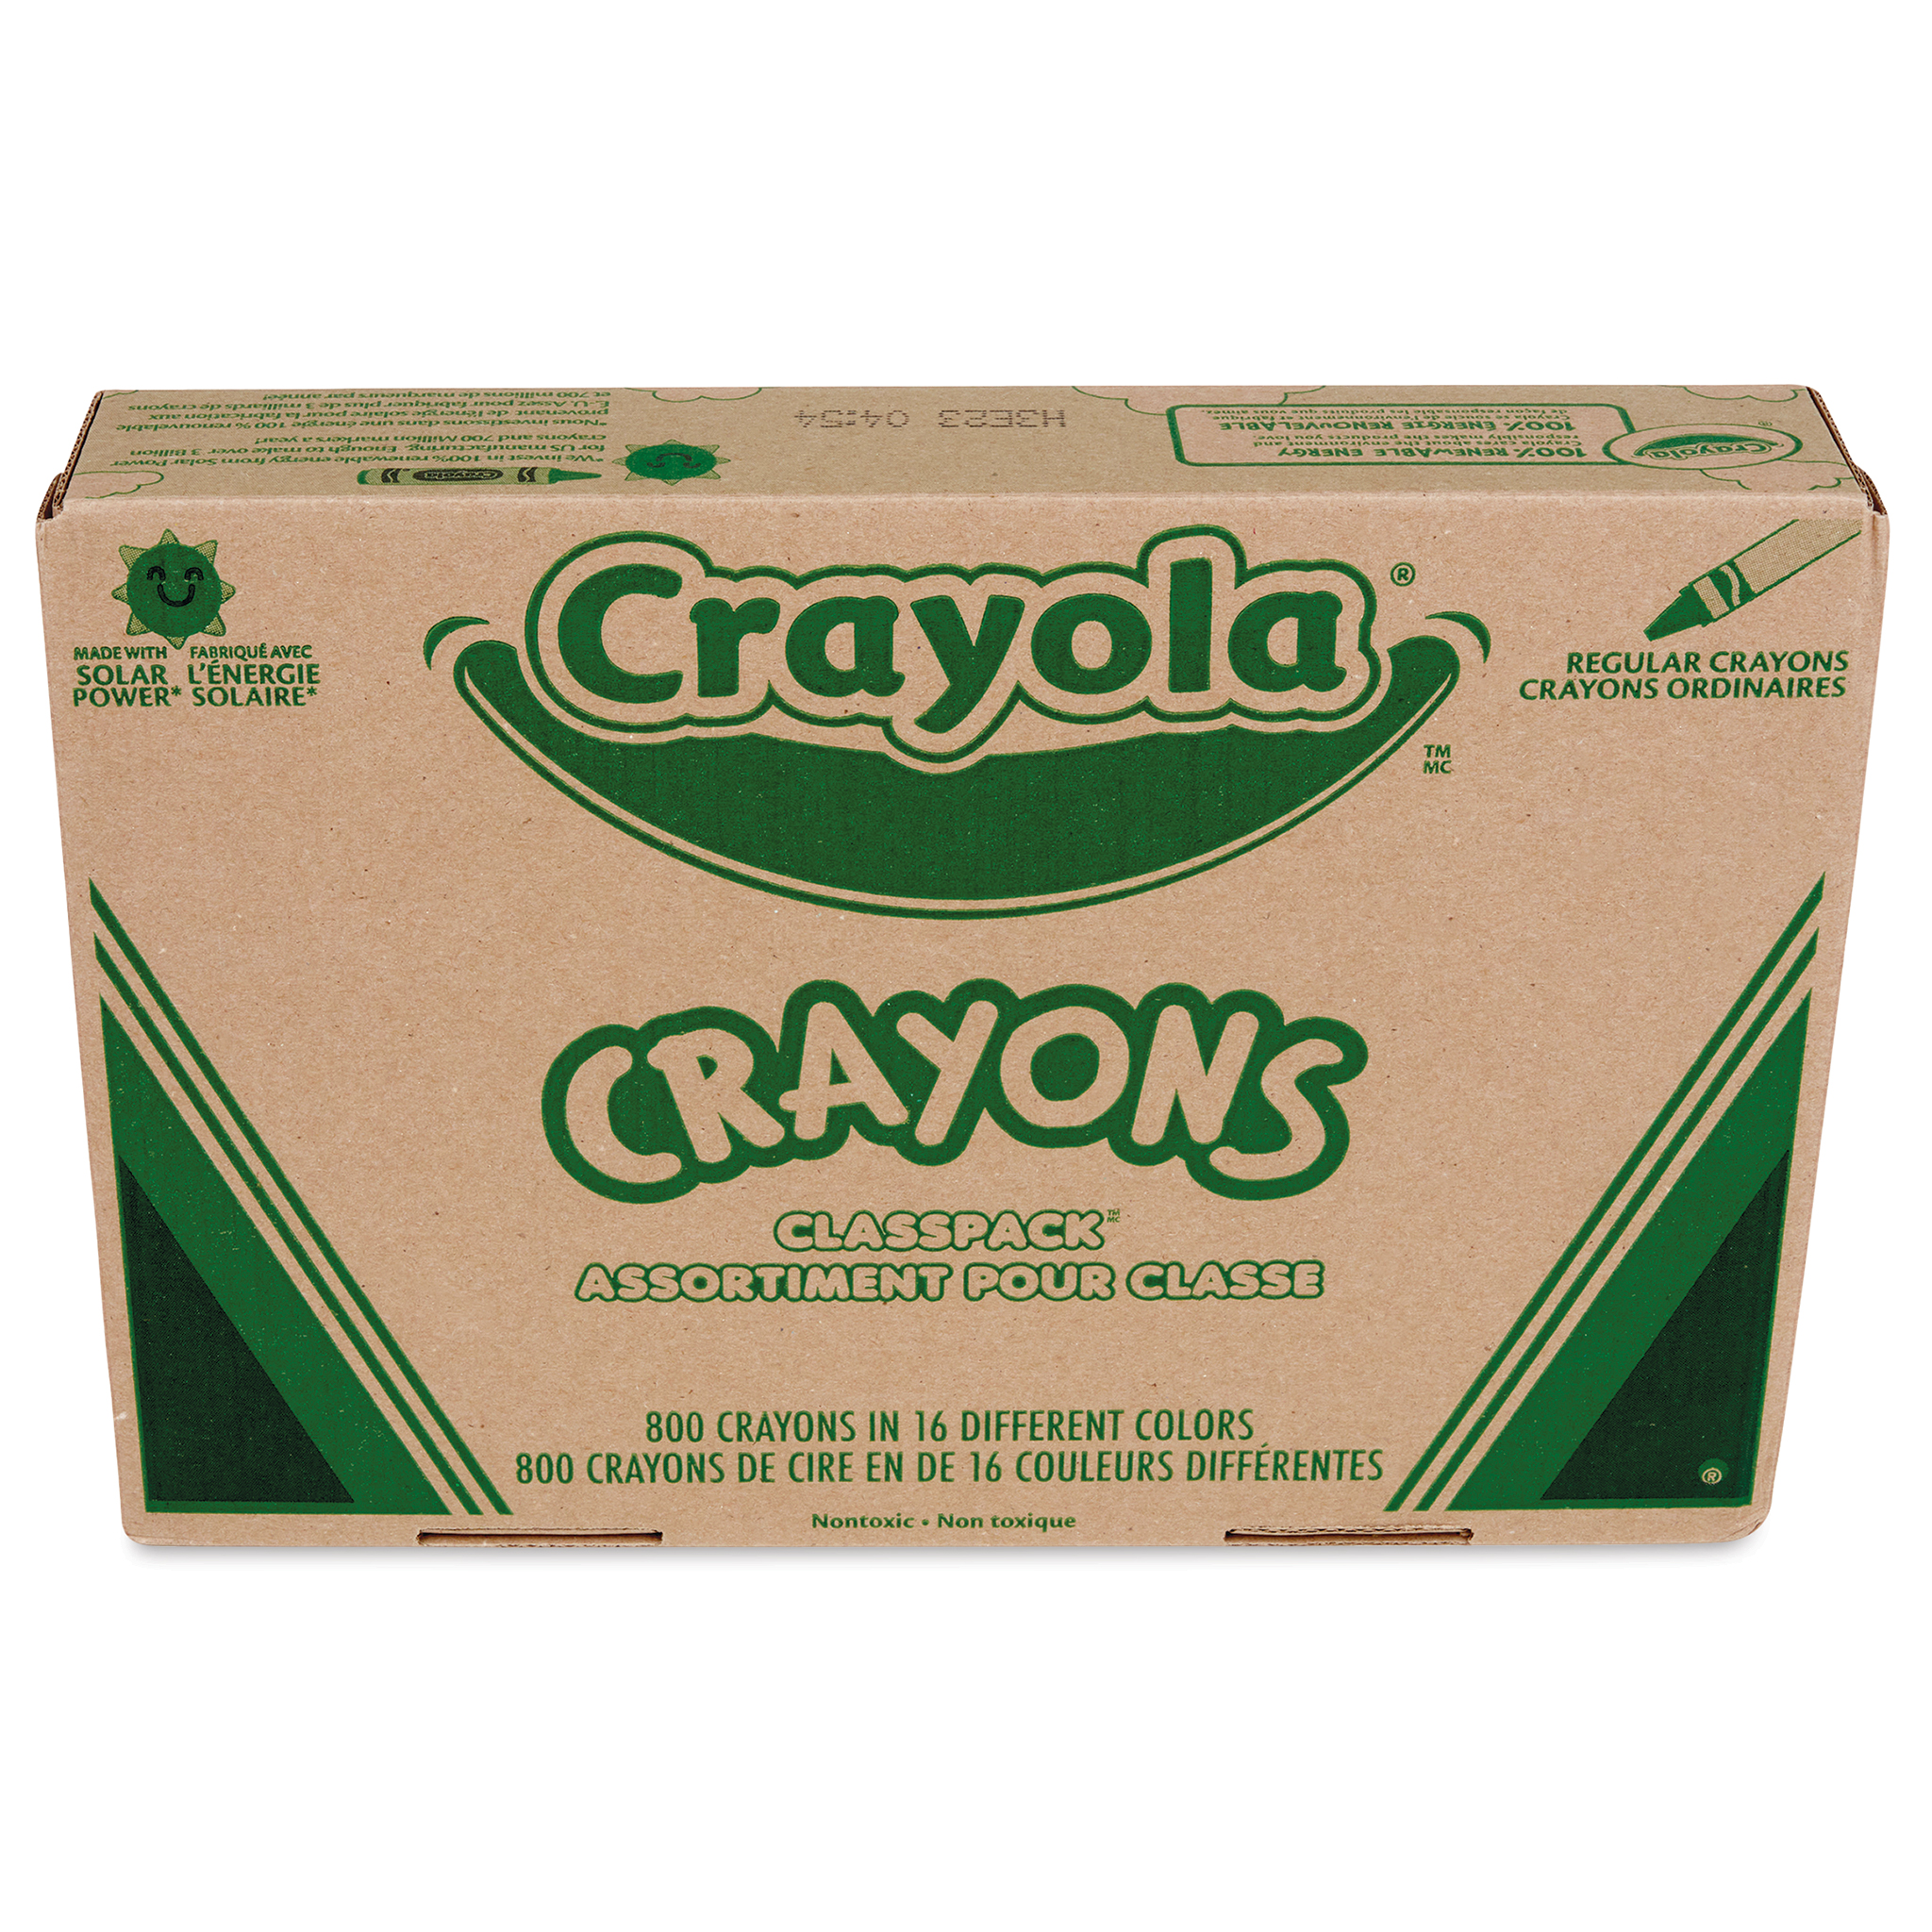  Crayola Crayon Classpack - 800ct (16 Assorted Colors